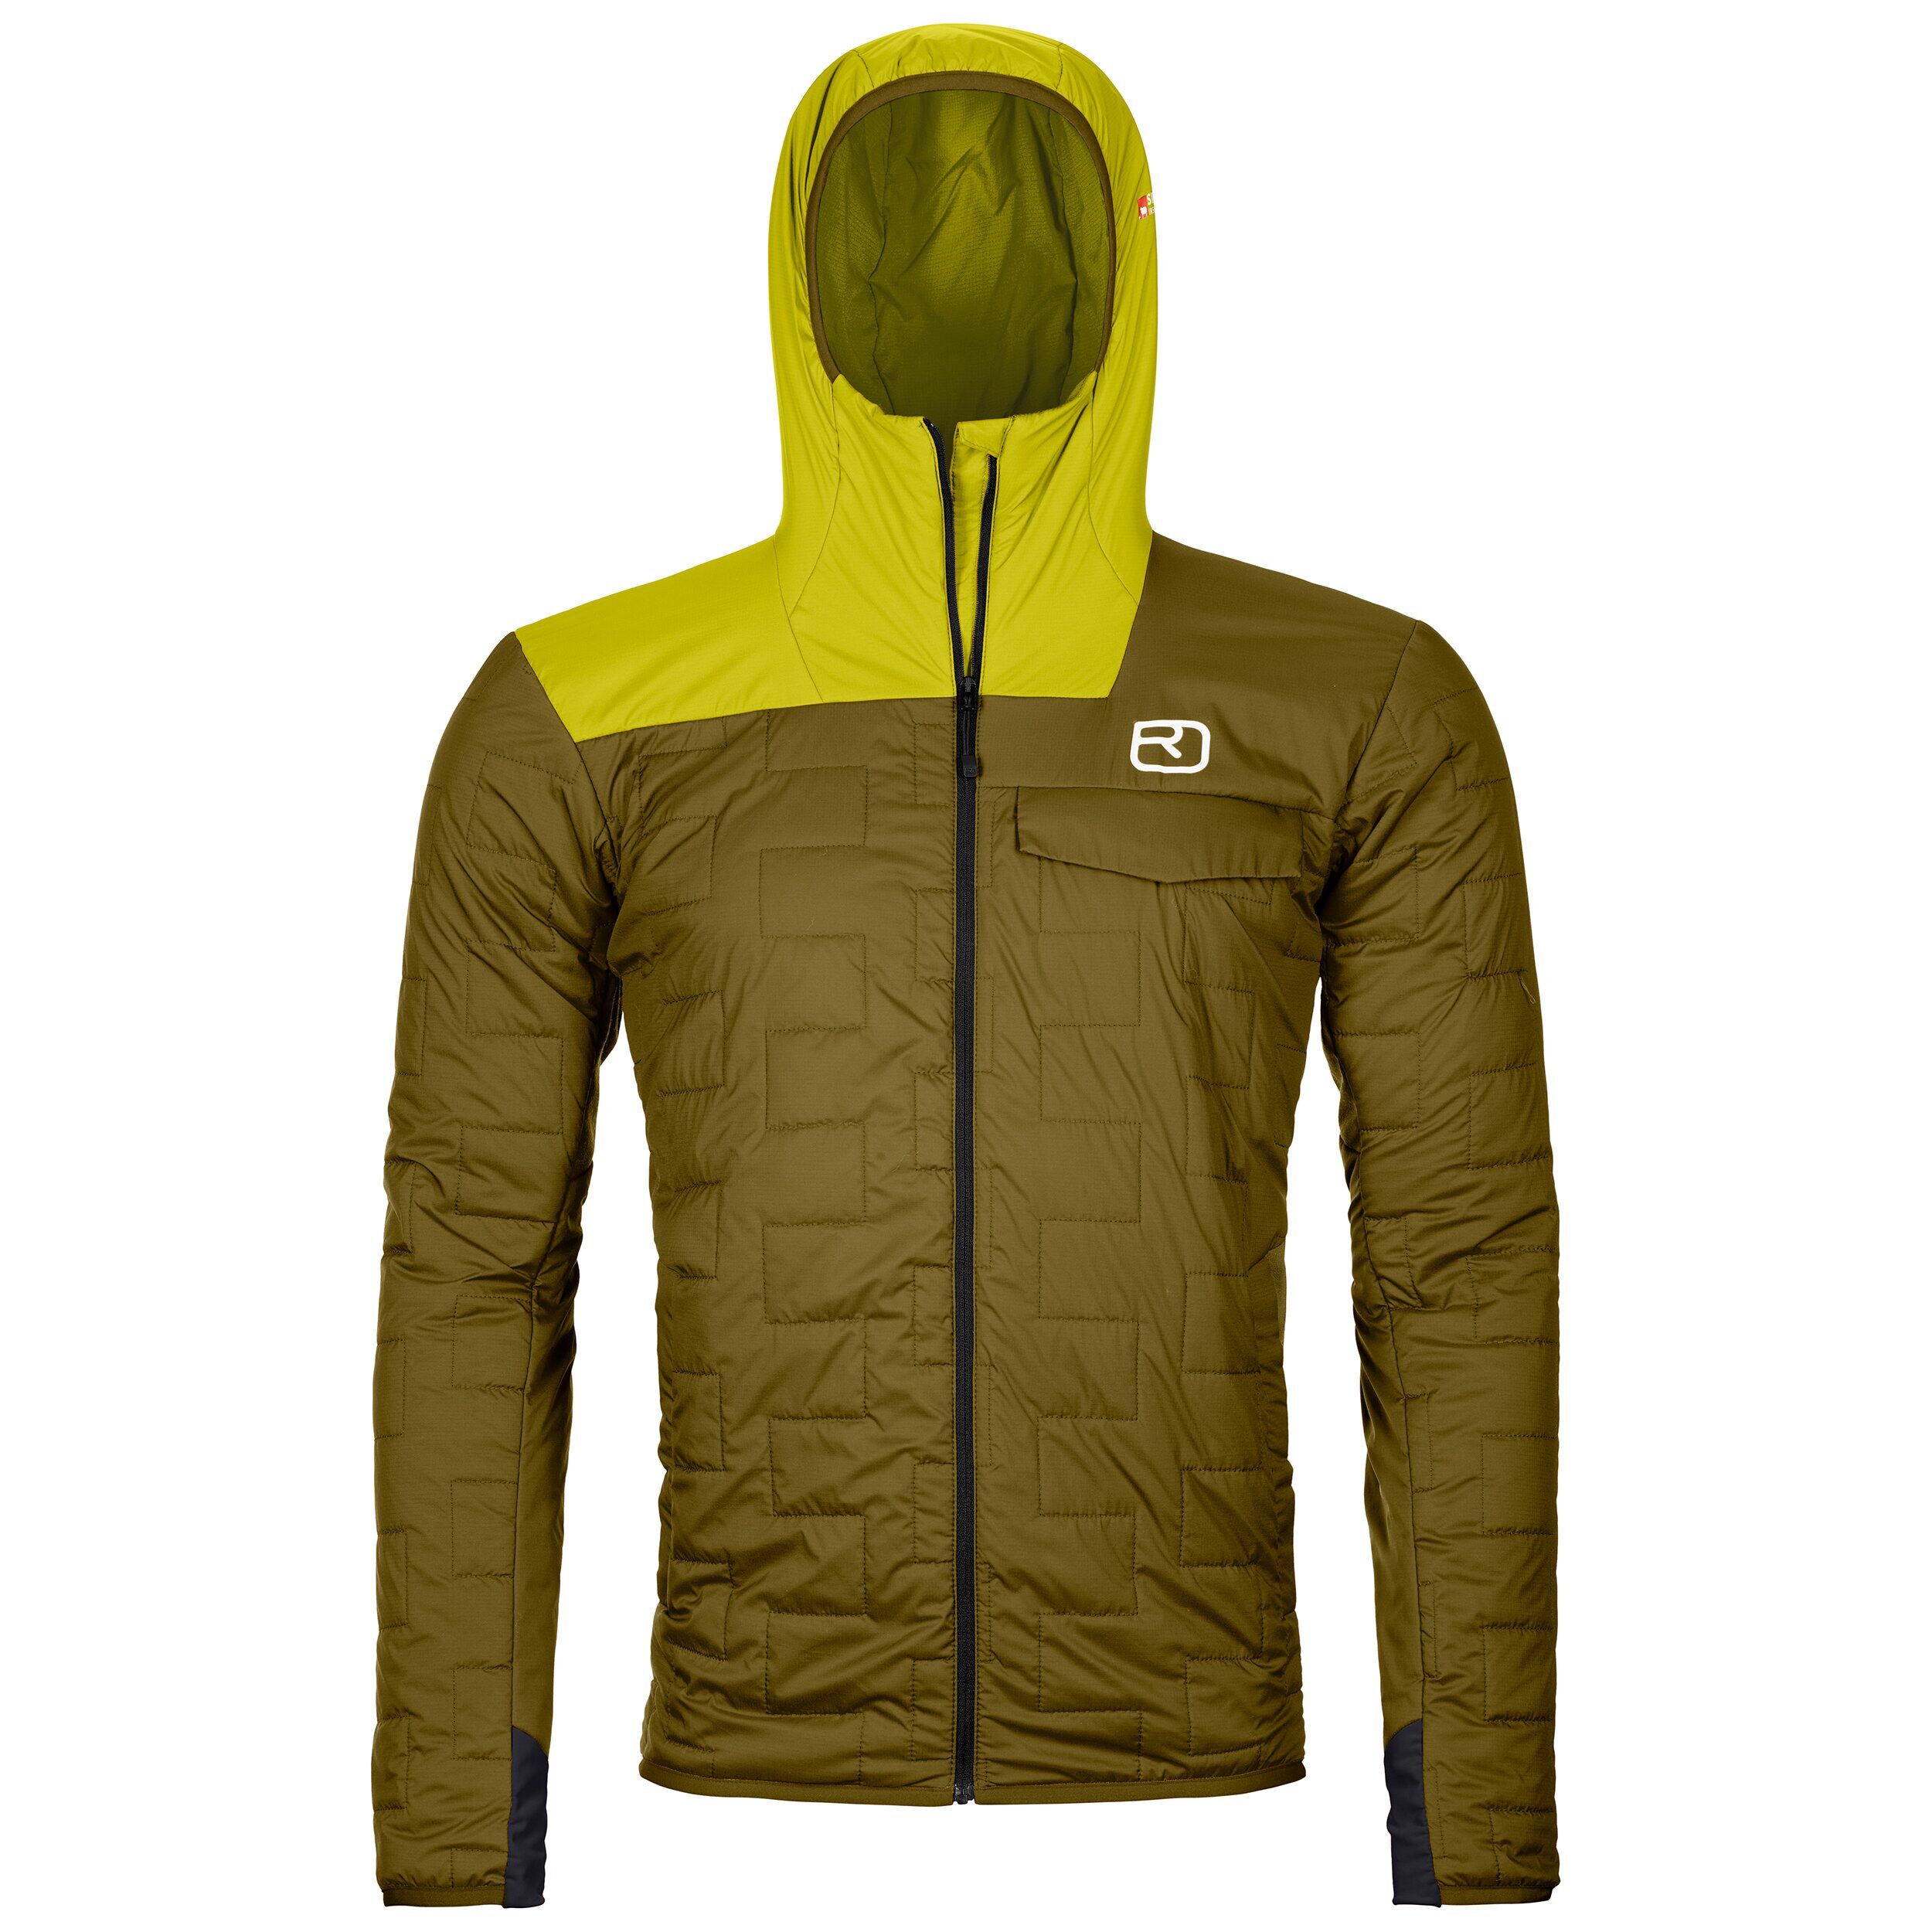 Ortovox Swisswool Piz Badus down jacket Inwild online trekking store